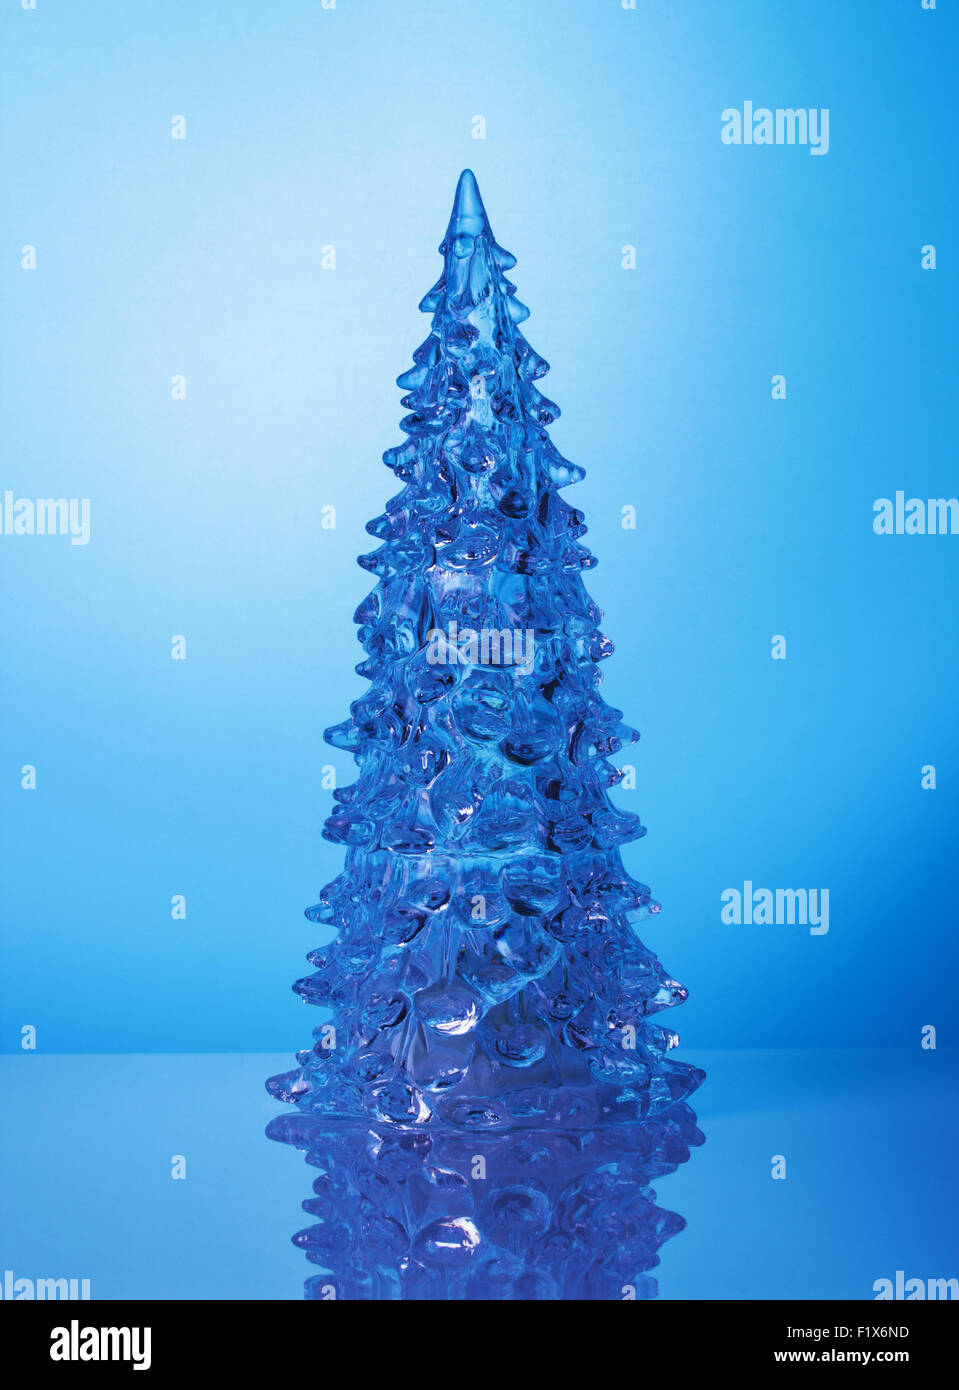 Crystal Christmas tree on blue background. Stock Photo